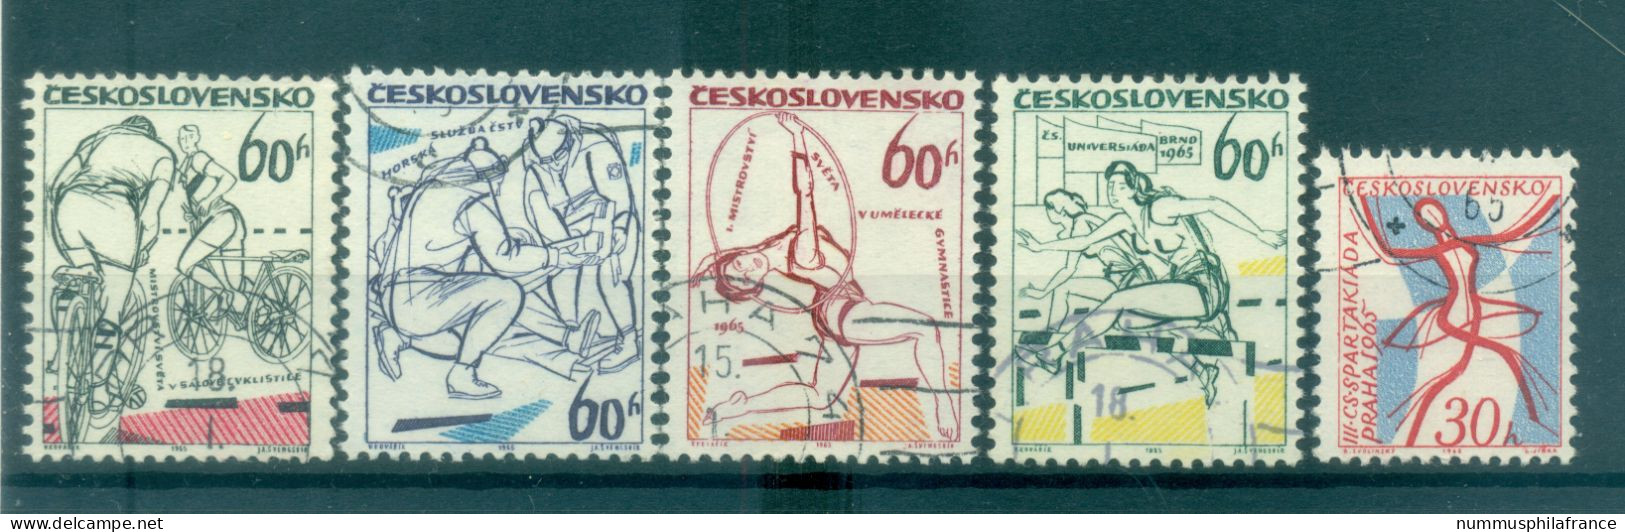 Tchécoslovaquie 1965 - Y & T N. 1369/73 - Evénements Sportifs (Michel N. 1503-1504/07) - Gebraucht